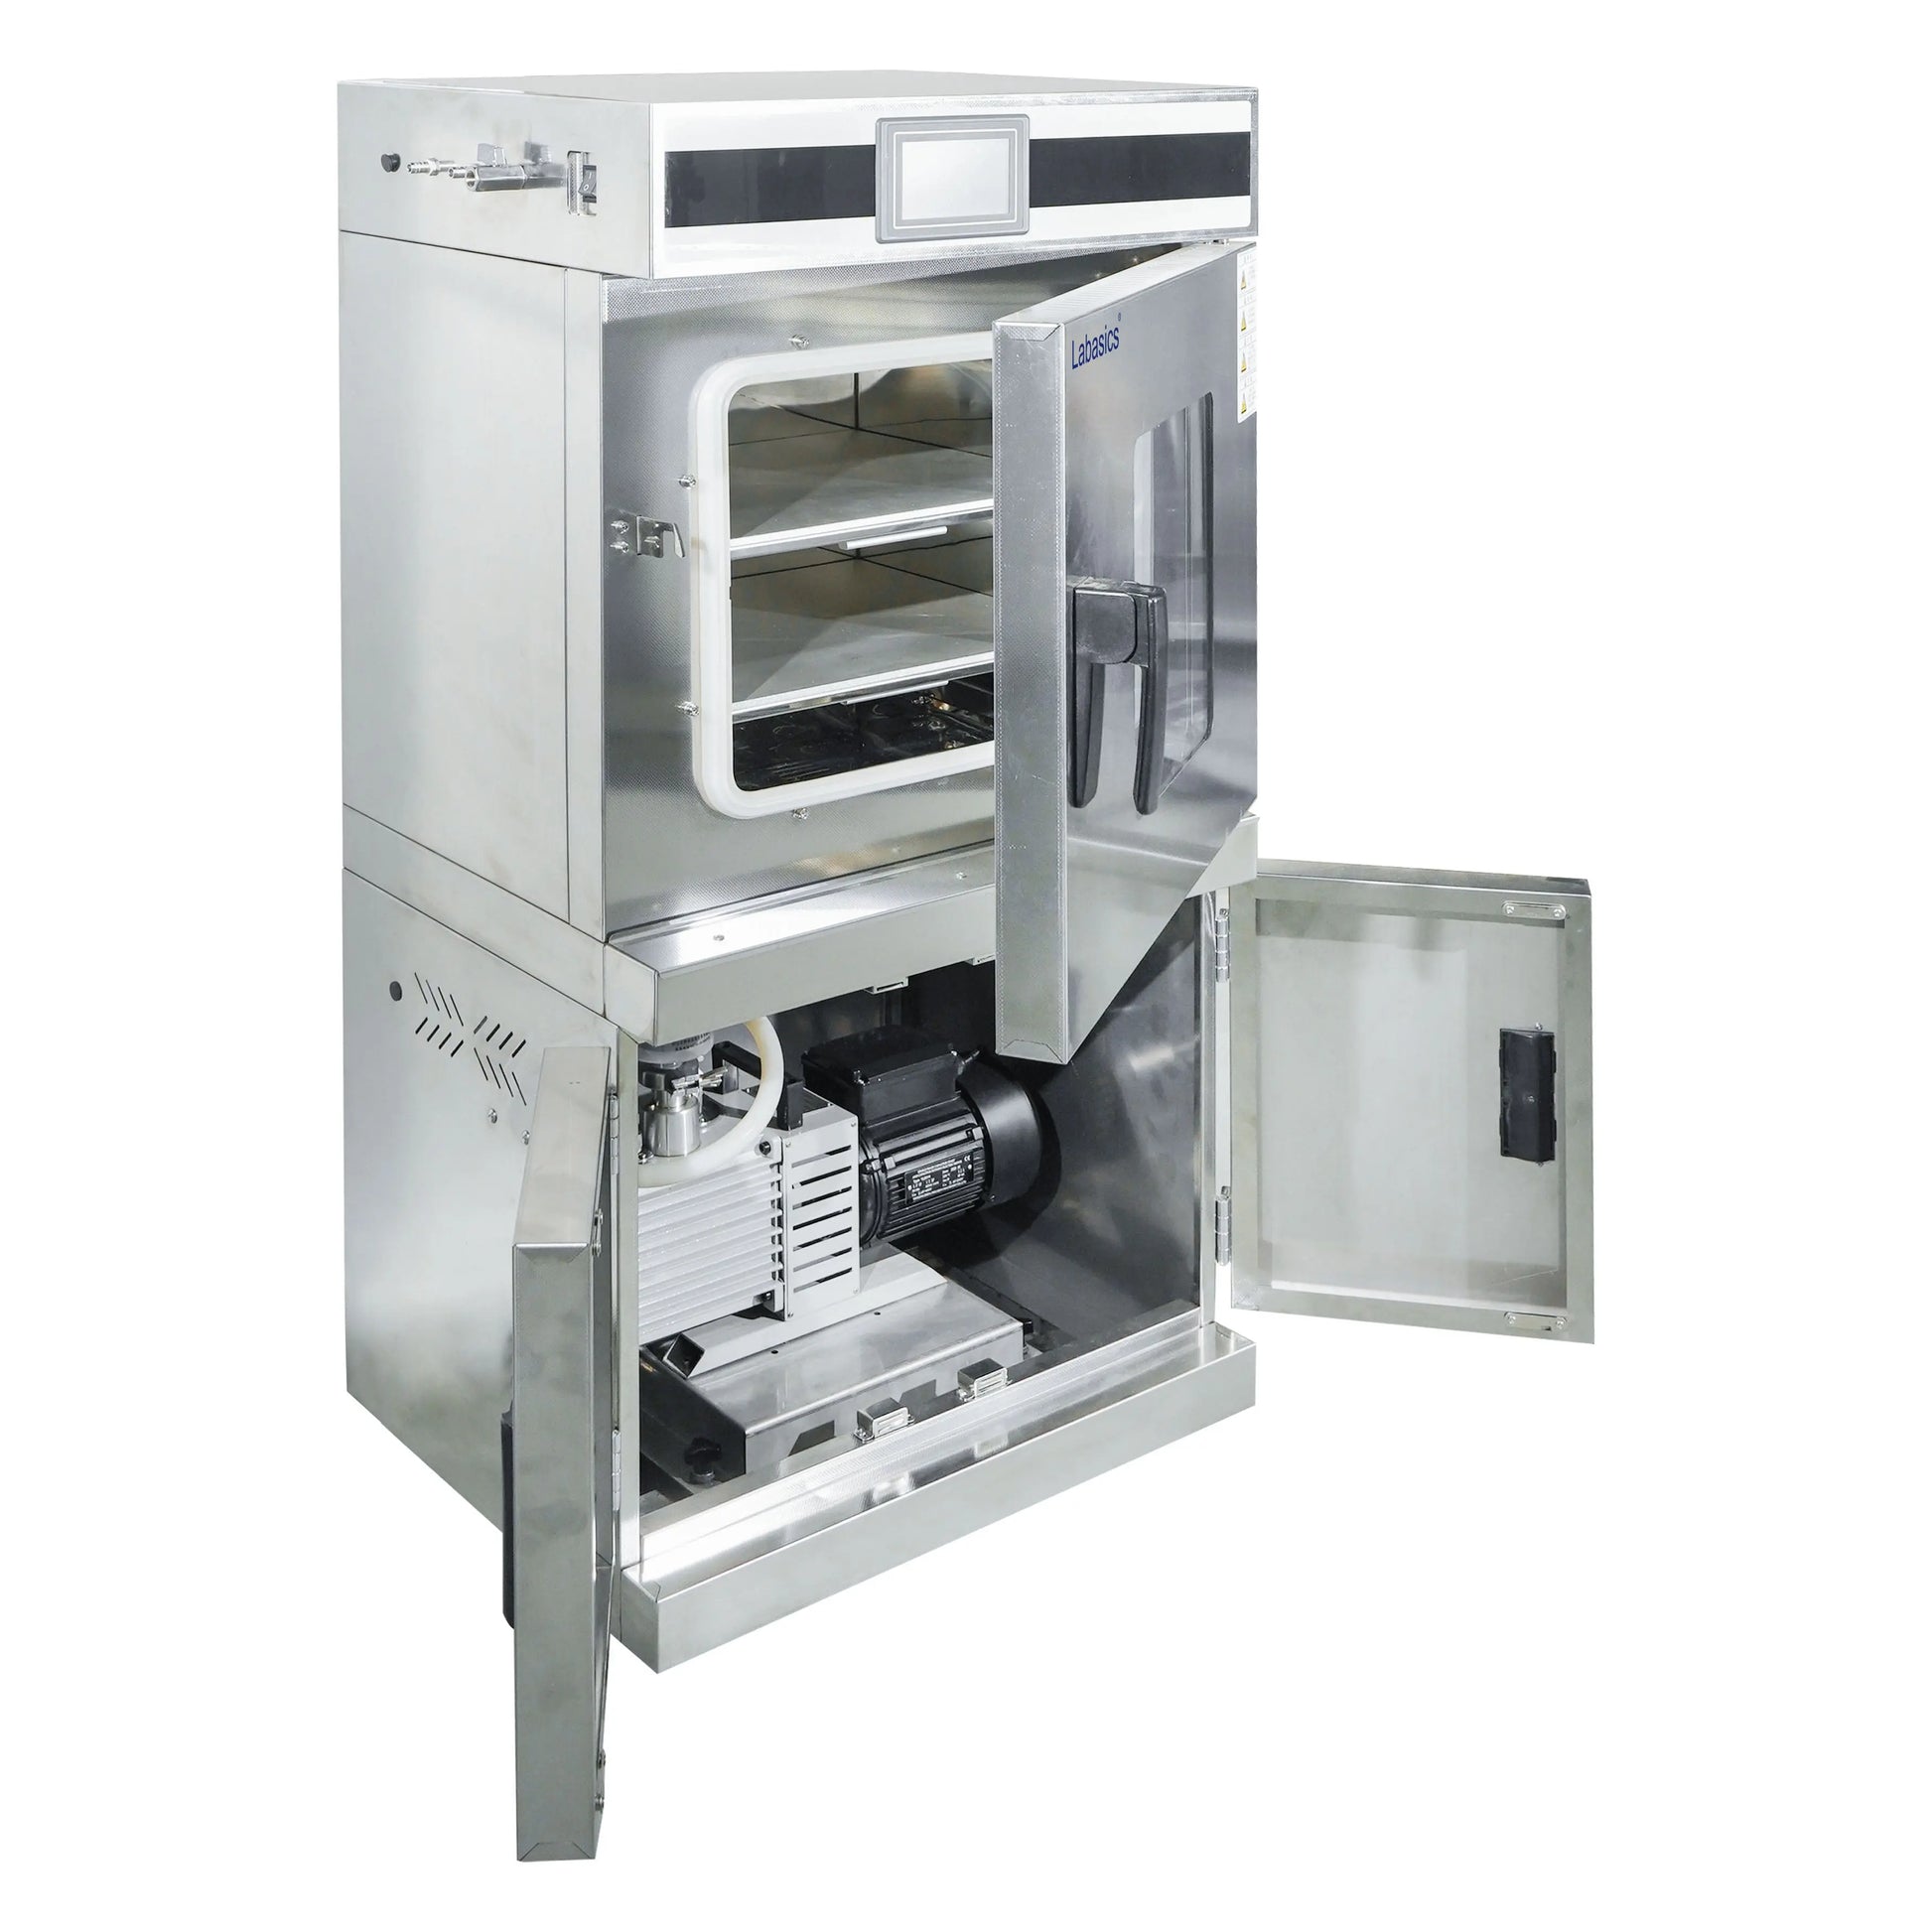 Precision Auto Vacuum Drying Oven, RT+10-250°C, 52- 214.5 L Stainless Steel Vacuum Chamber Labasics